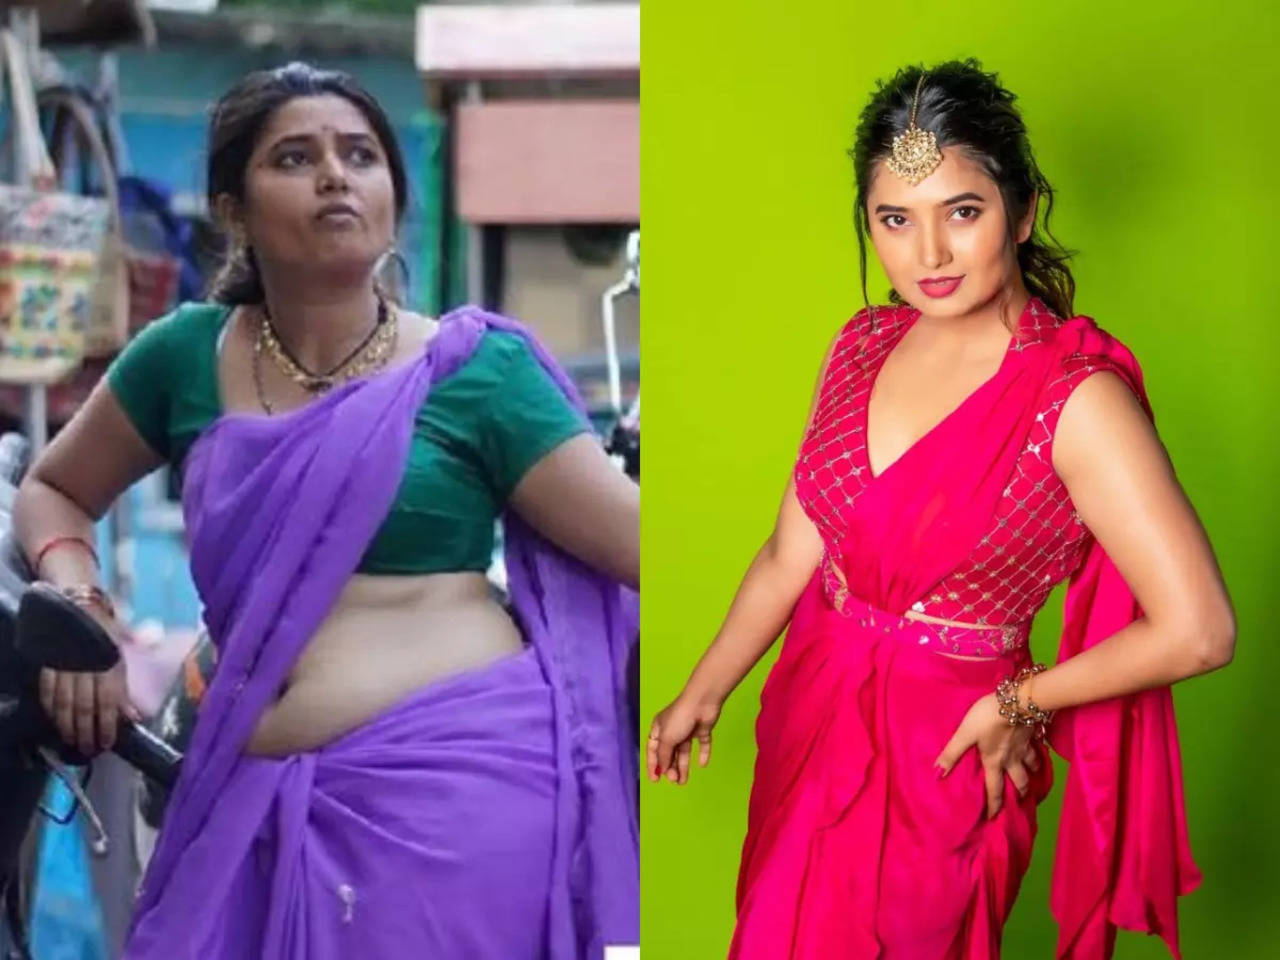 Prajakta Mali reveals she gained 7kgs to play sex worker in RaanBaazaar photo